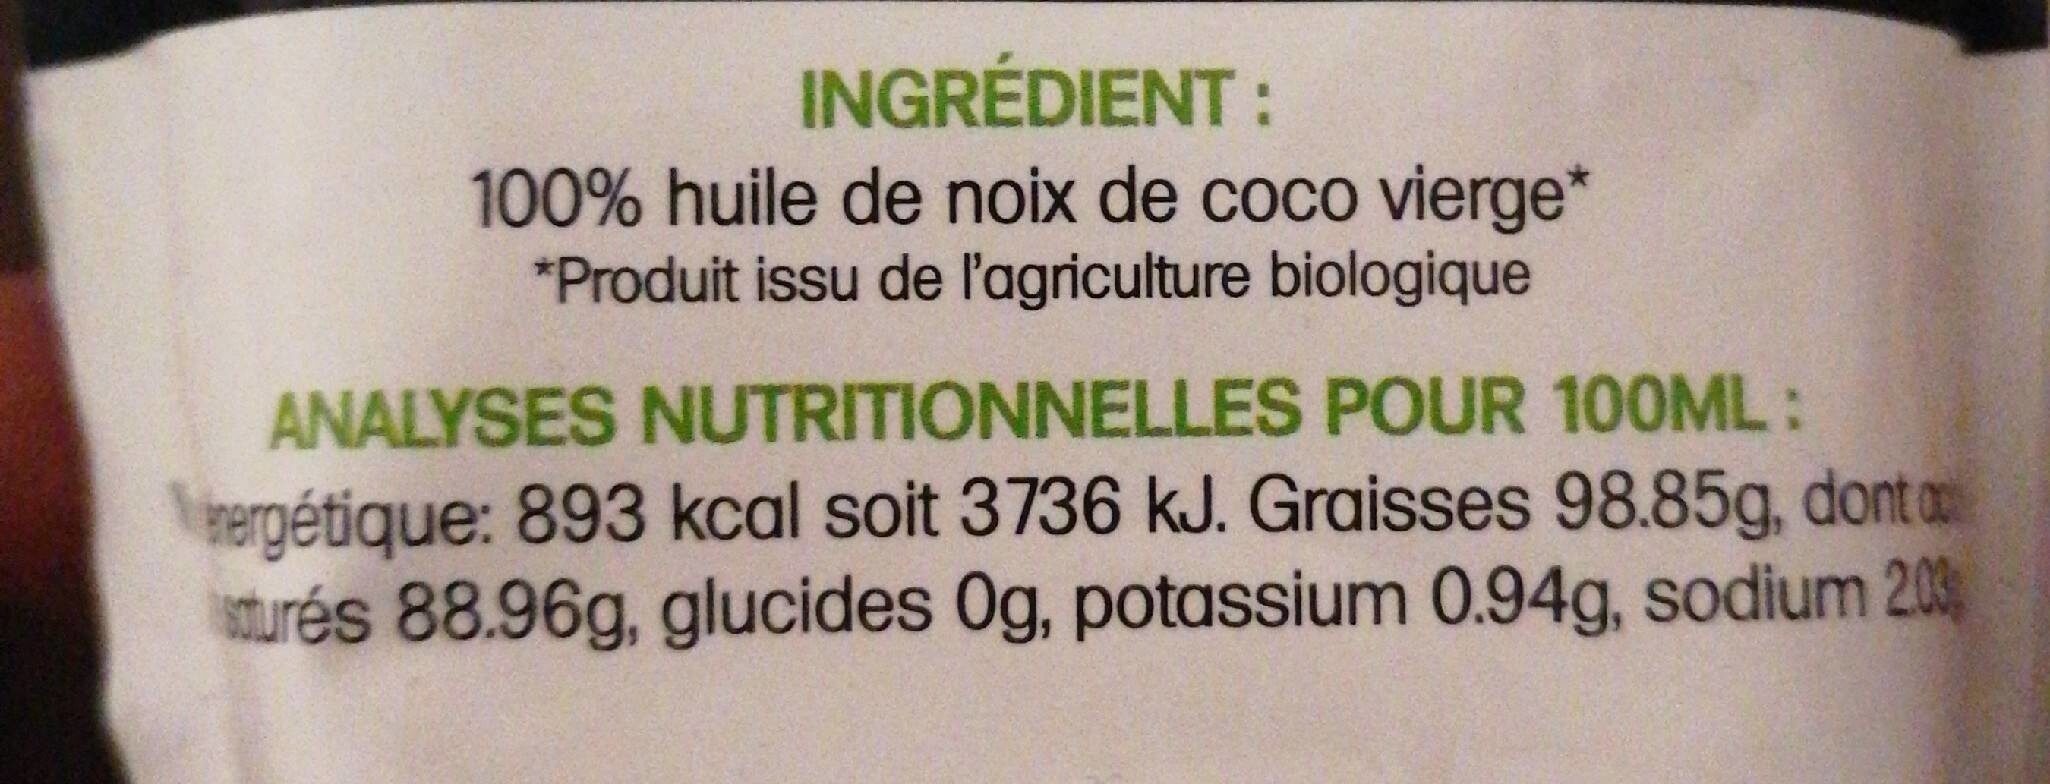 Huile de coco - Nutrition facts - fr